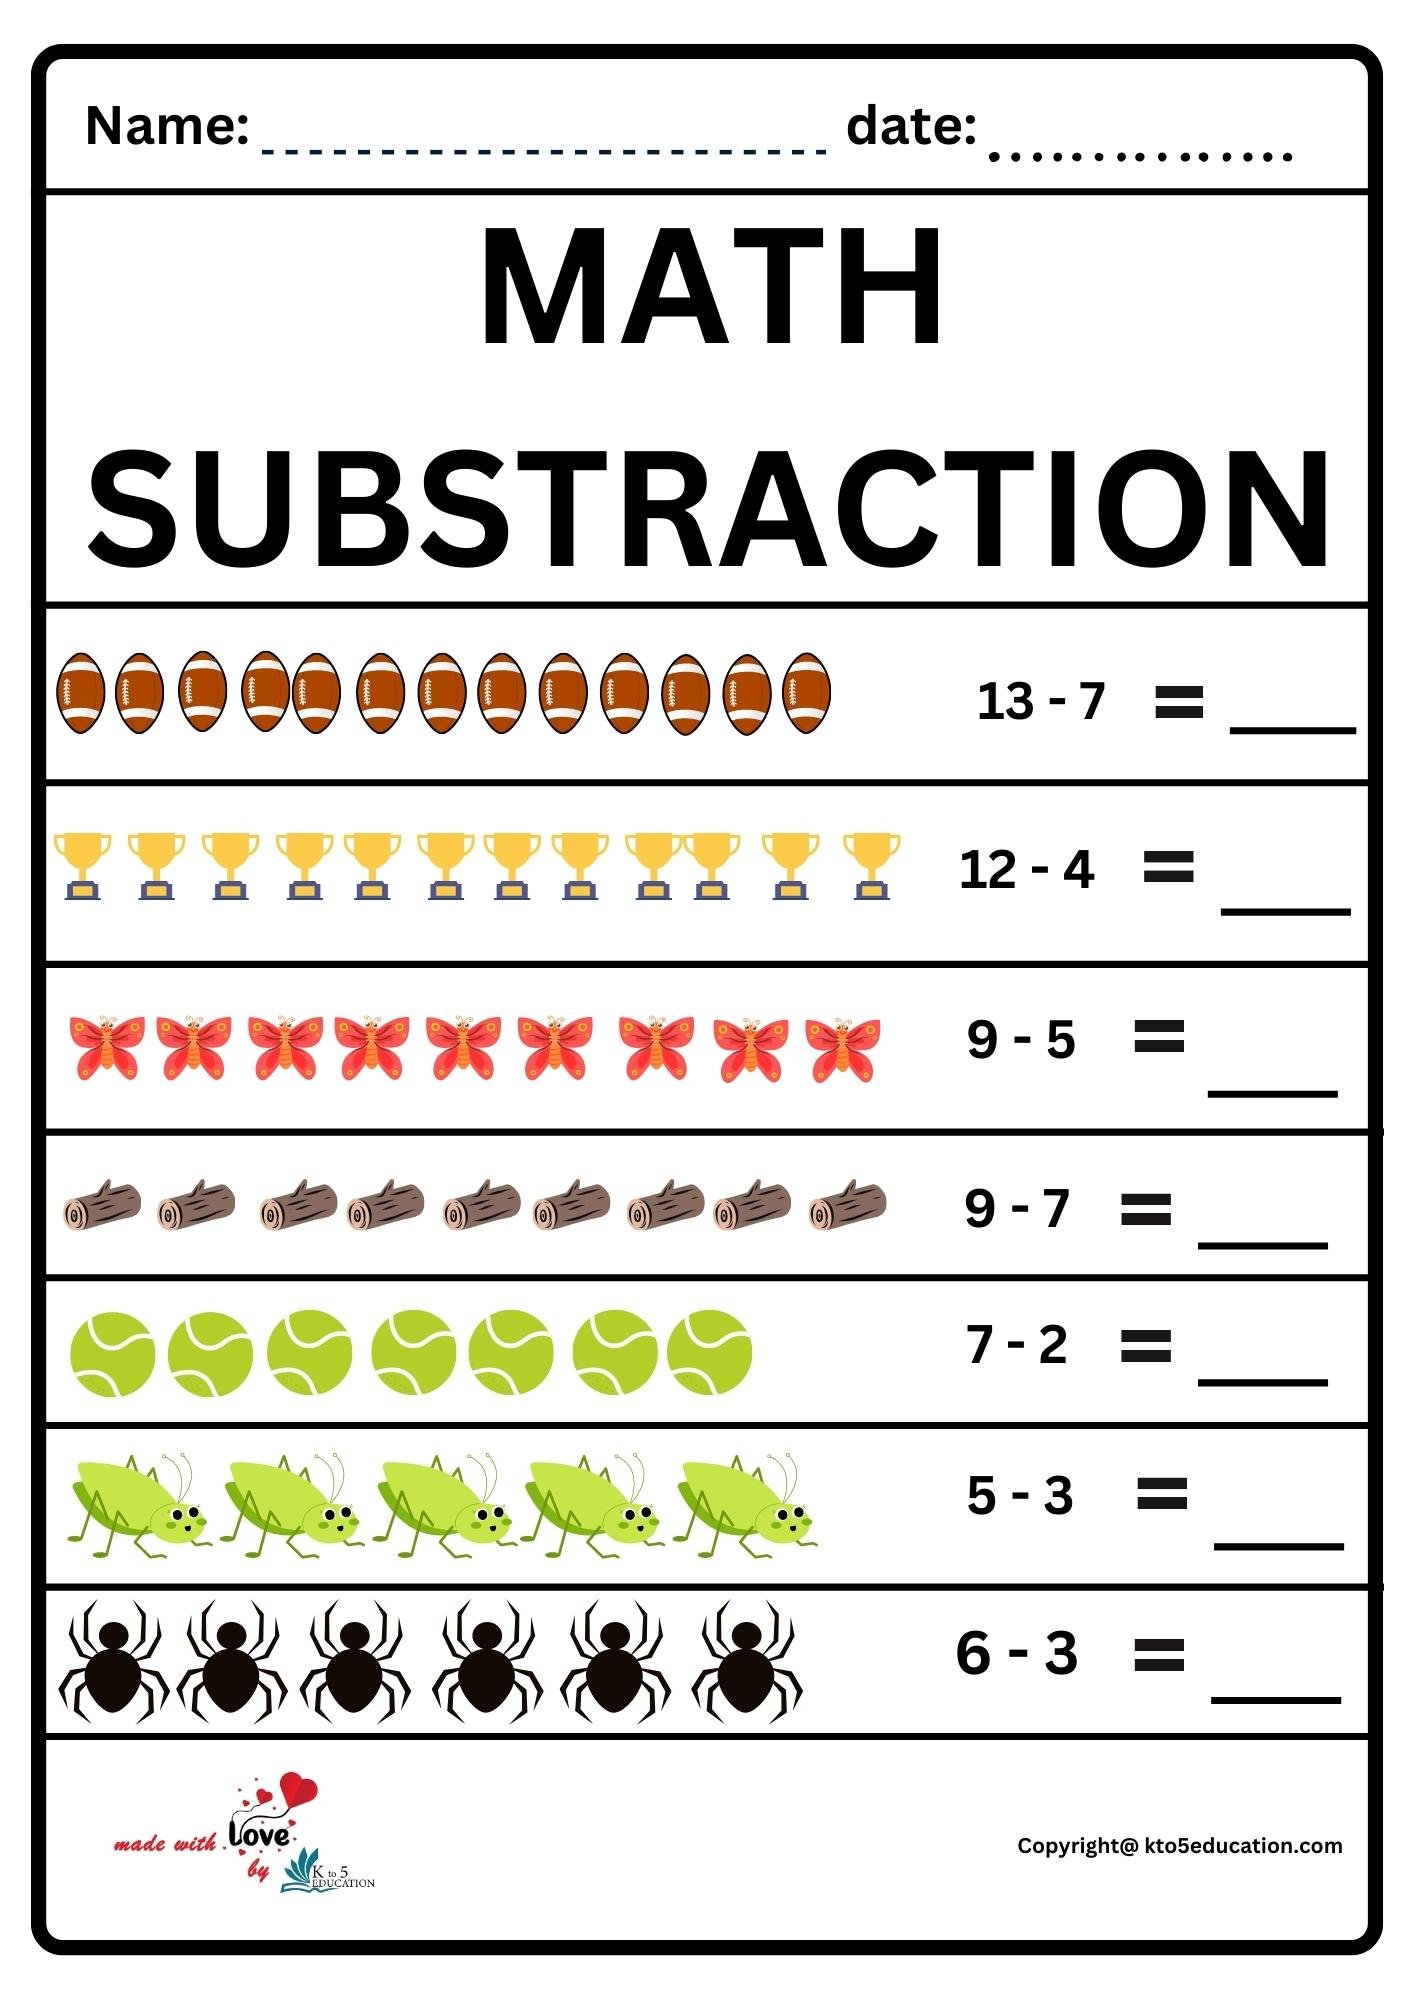 Math Substraction Worksheet 2